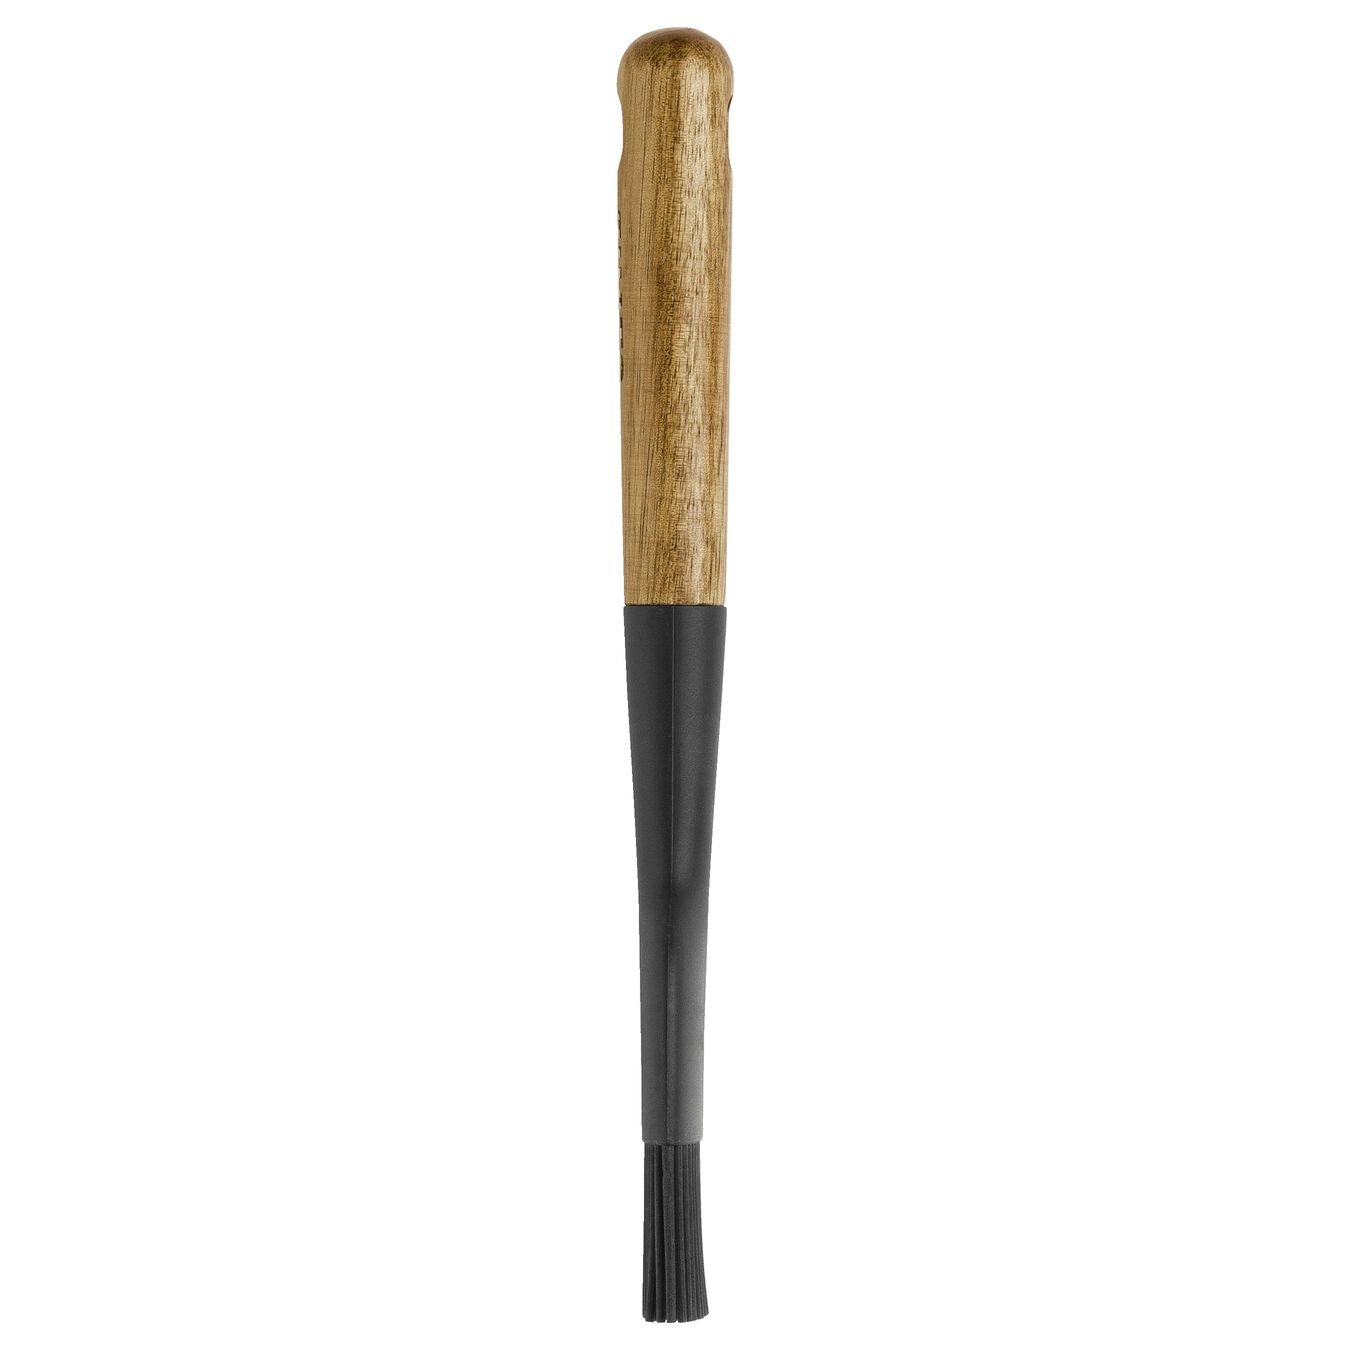 22 cm silicone Pastry brush, black,,large 3